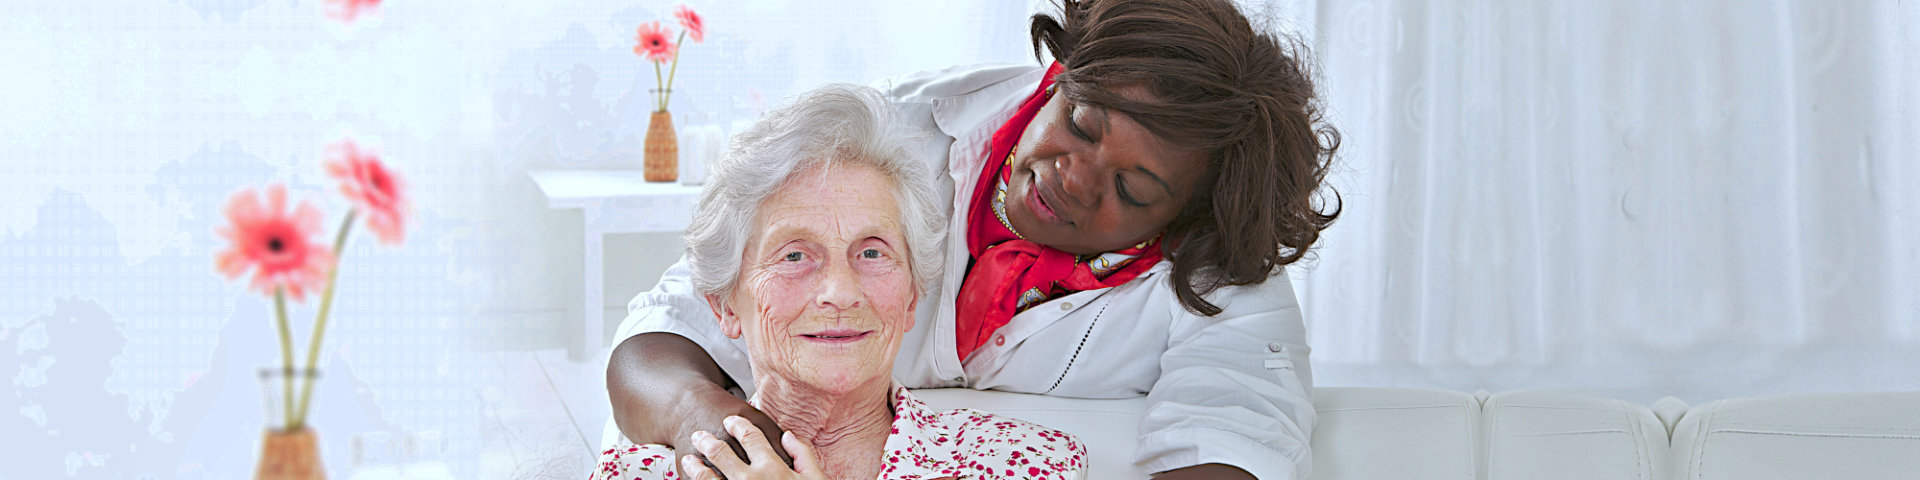 Happy senior patient with friendly female nurse